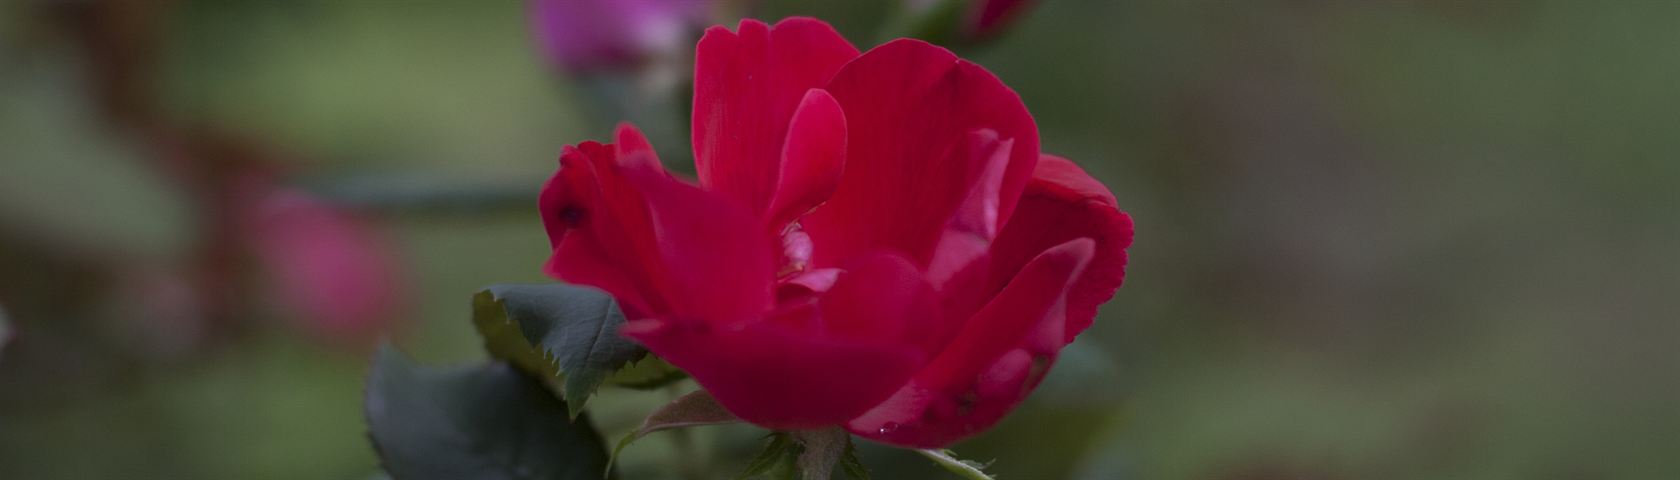 Central Rose